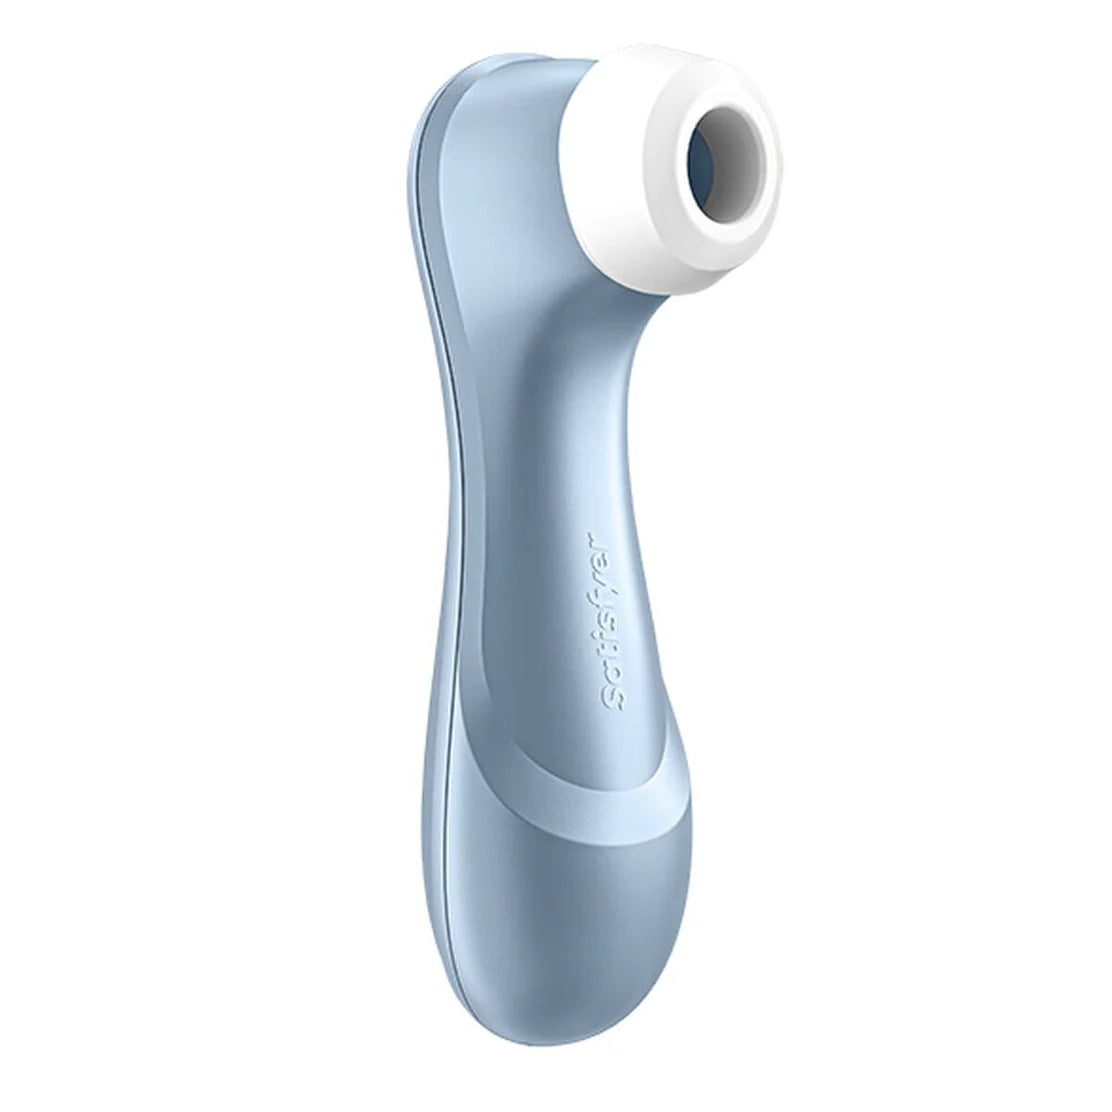 Clitoris vibrator - gerichte stimulatie met onder meer airpuls of pinpoint